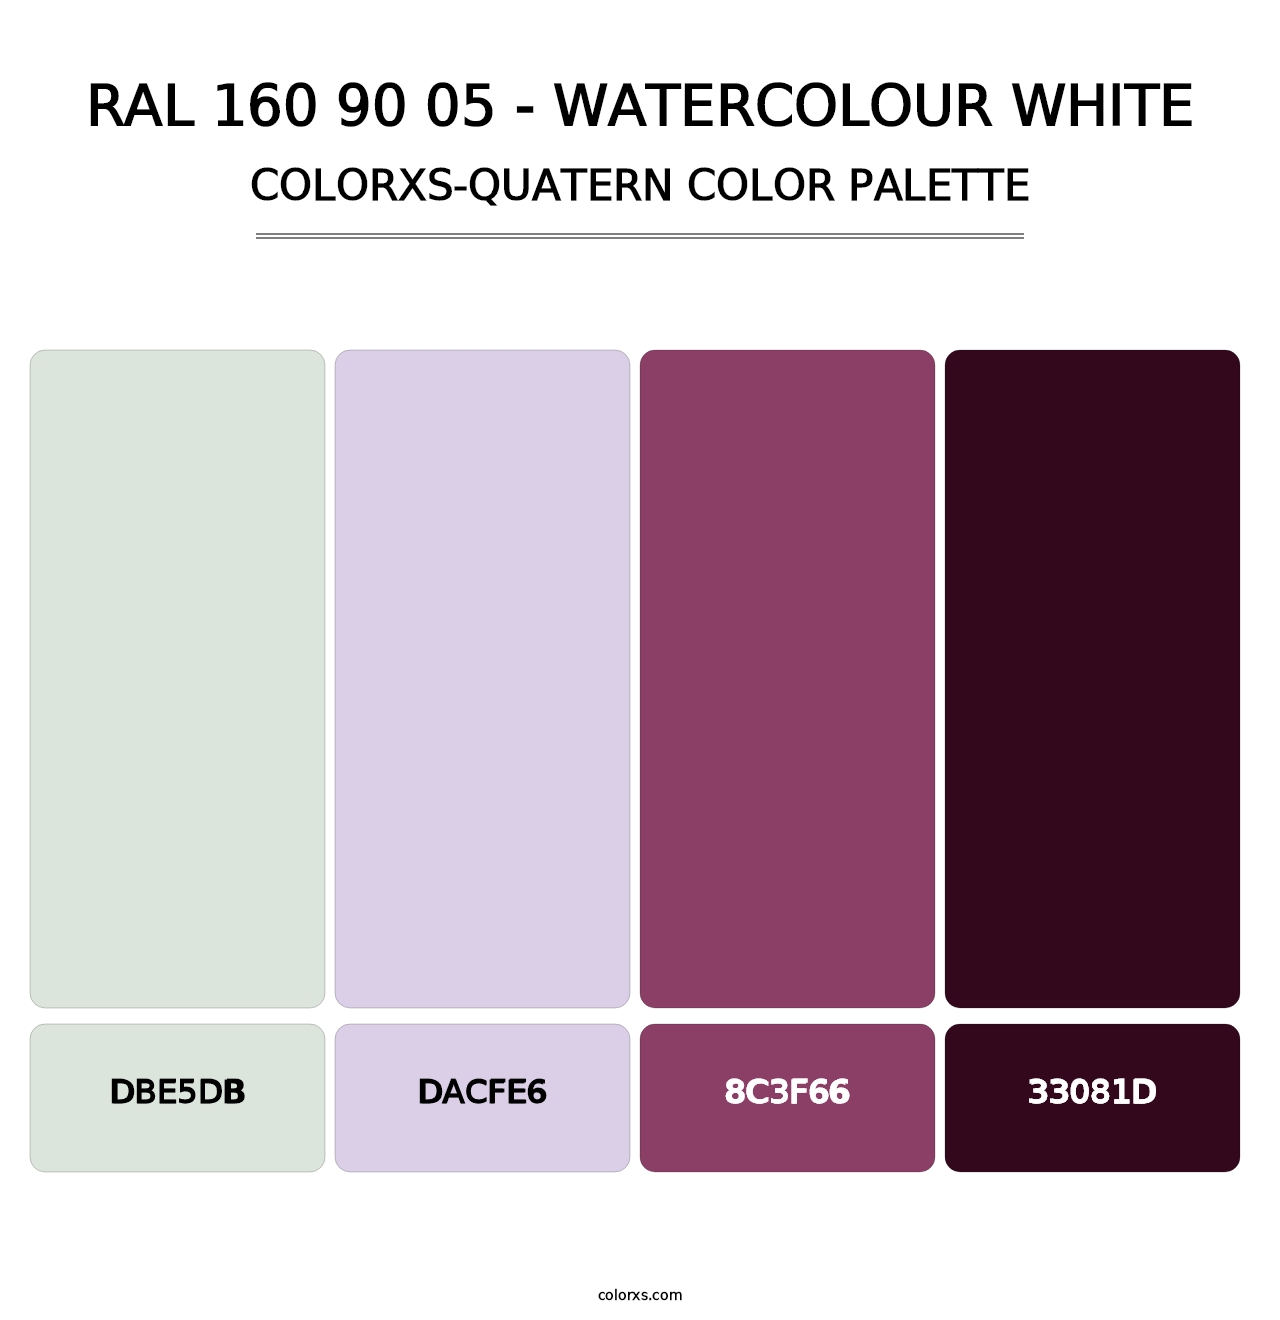 RAL 160 90 05 - Watercolour White - Colorxs Quatern Palette